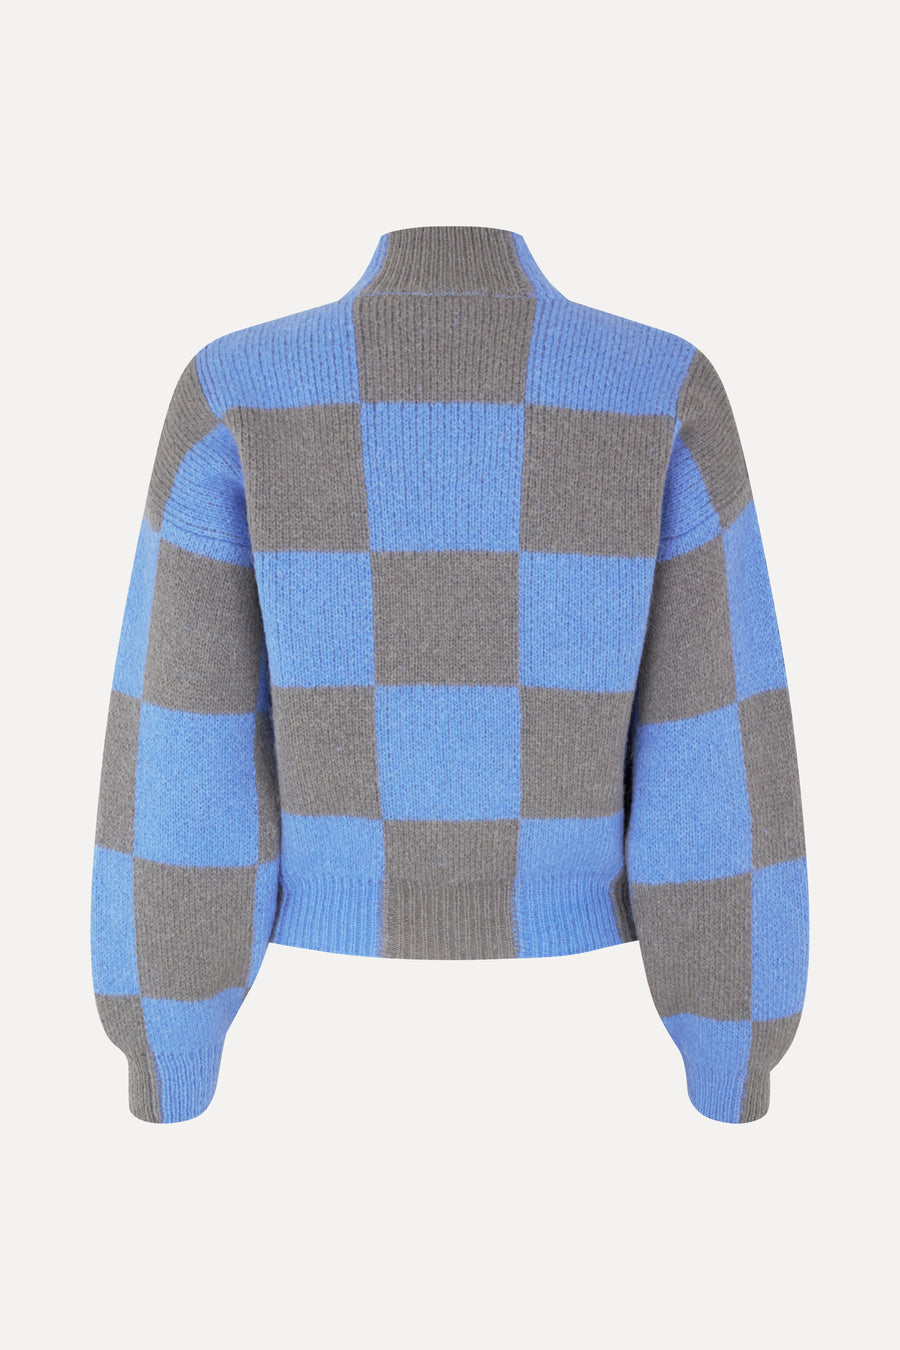 Stine Goya Adonis Sweater - Alaskan Blue Check